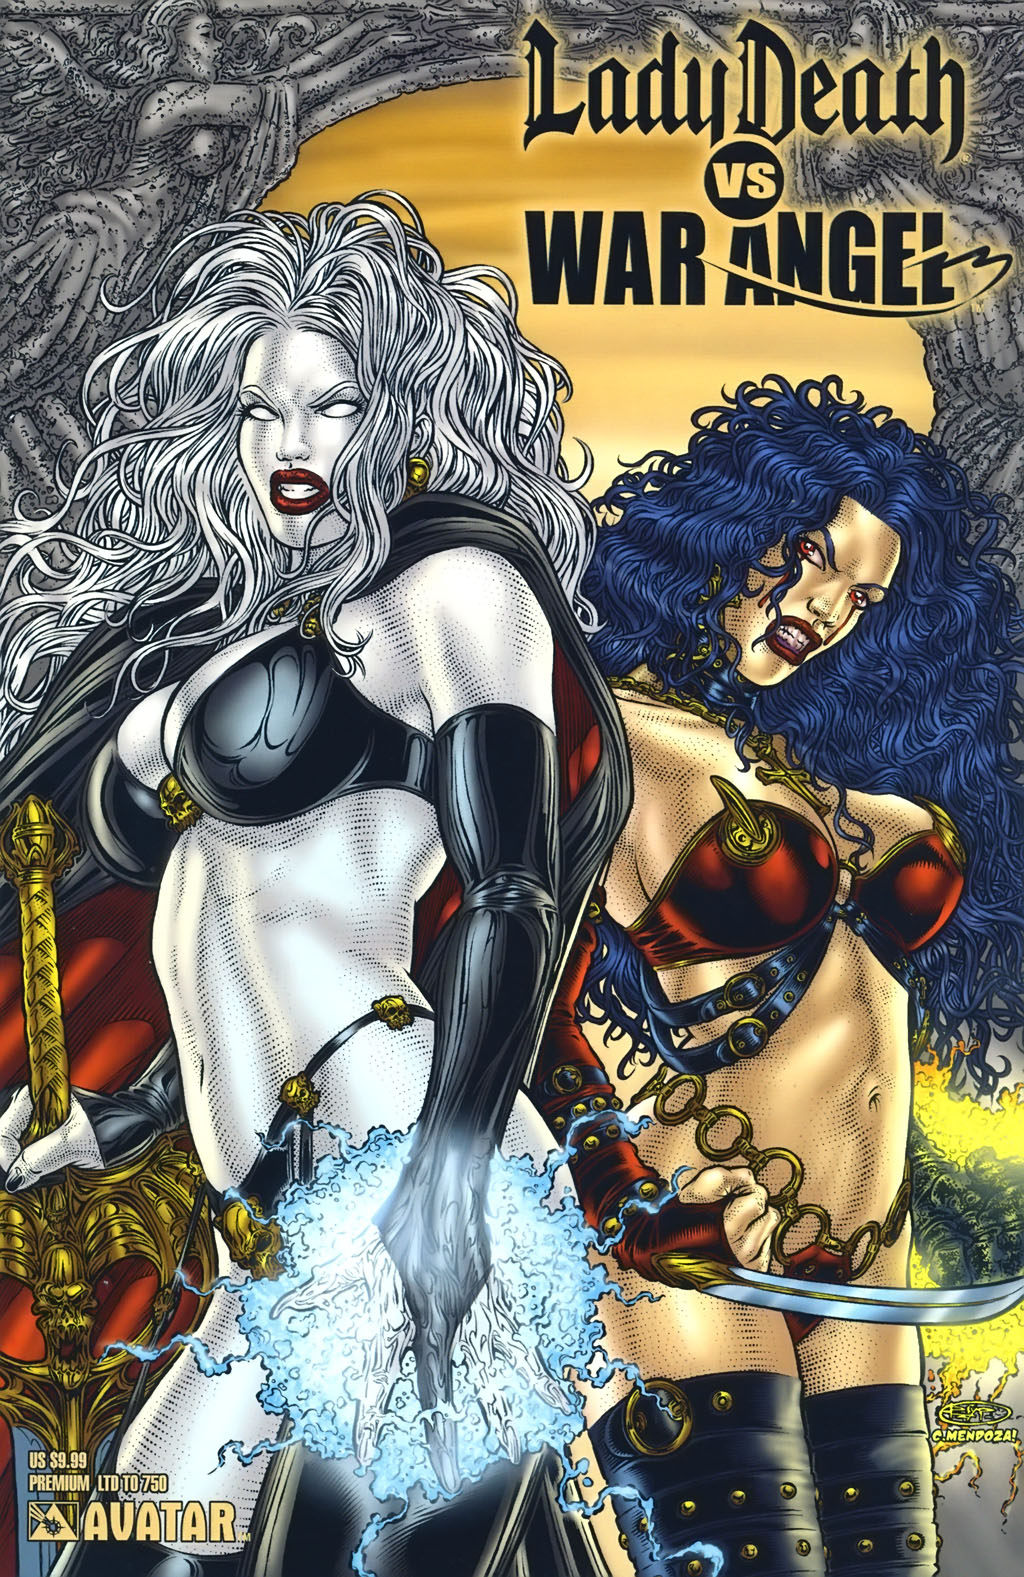 Read online Brian Pulido's Lady Death vs War Angel comic -  Issue # Full - 3